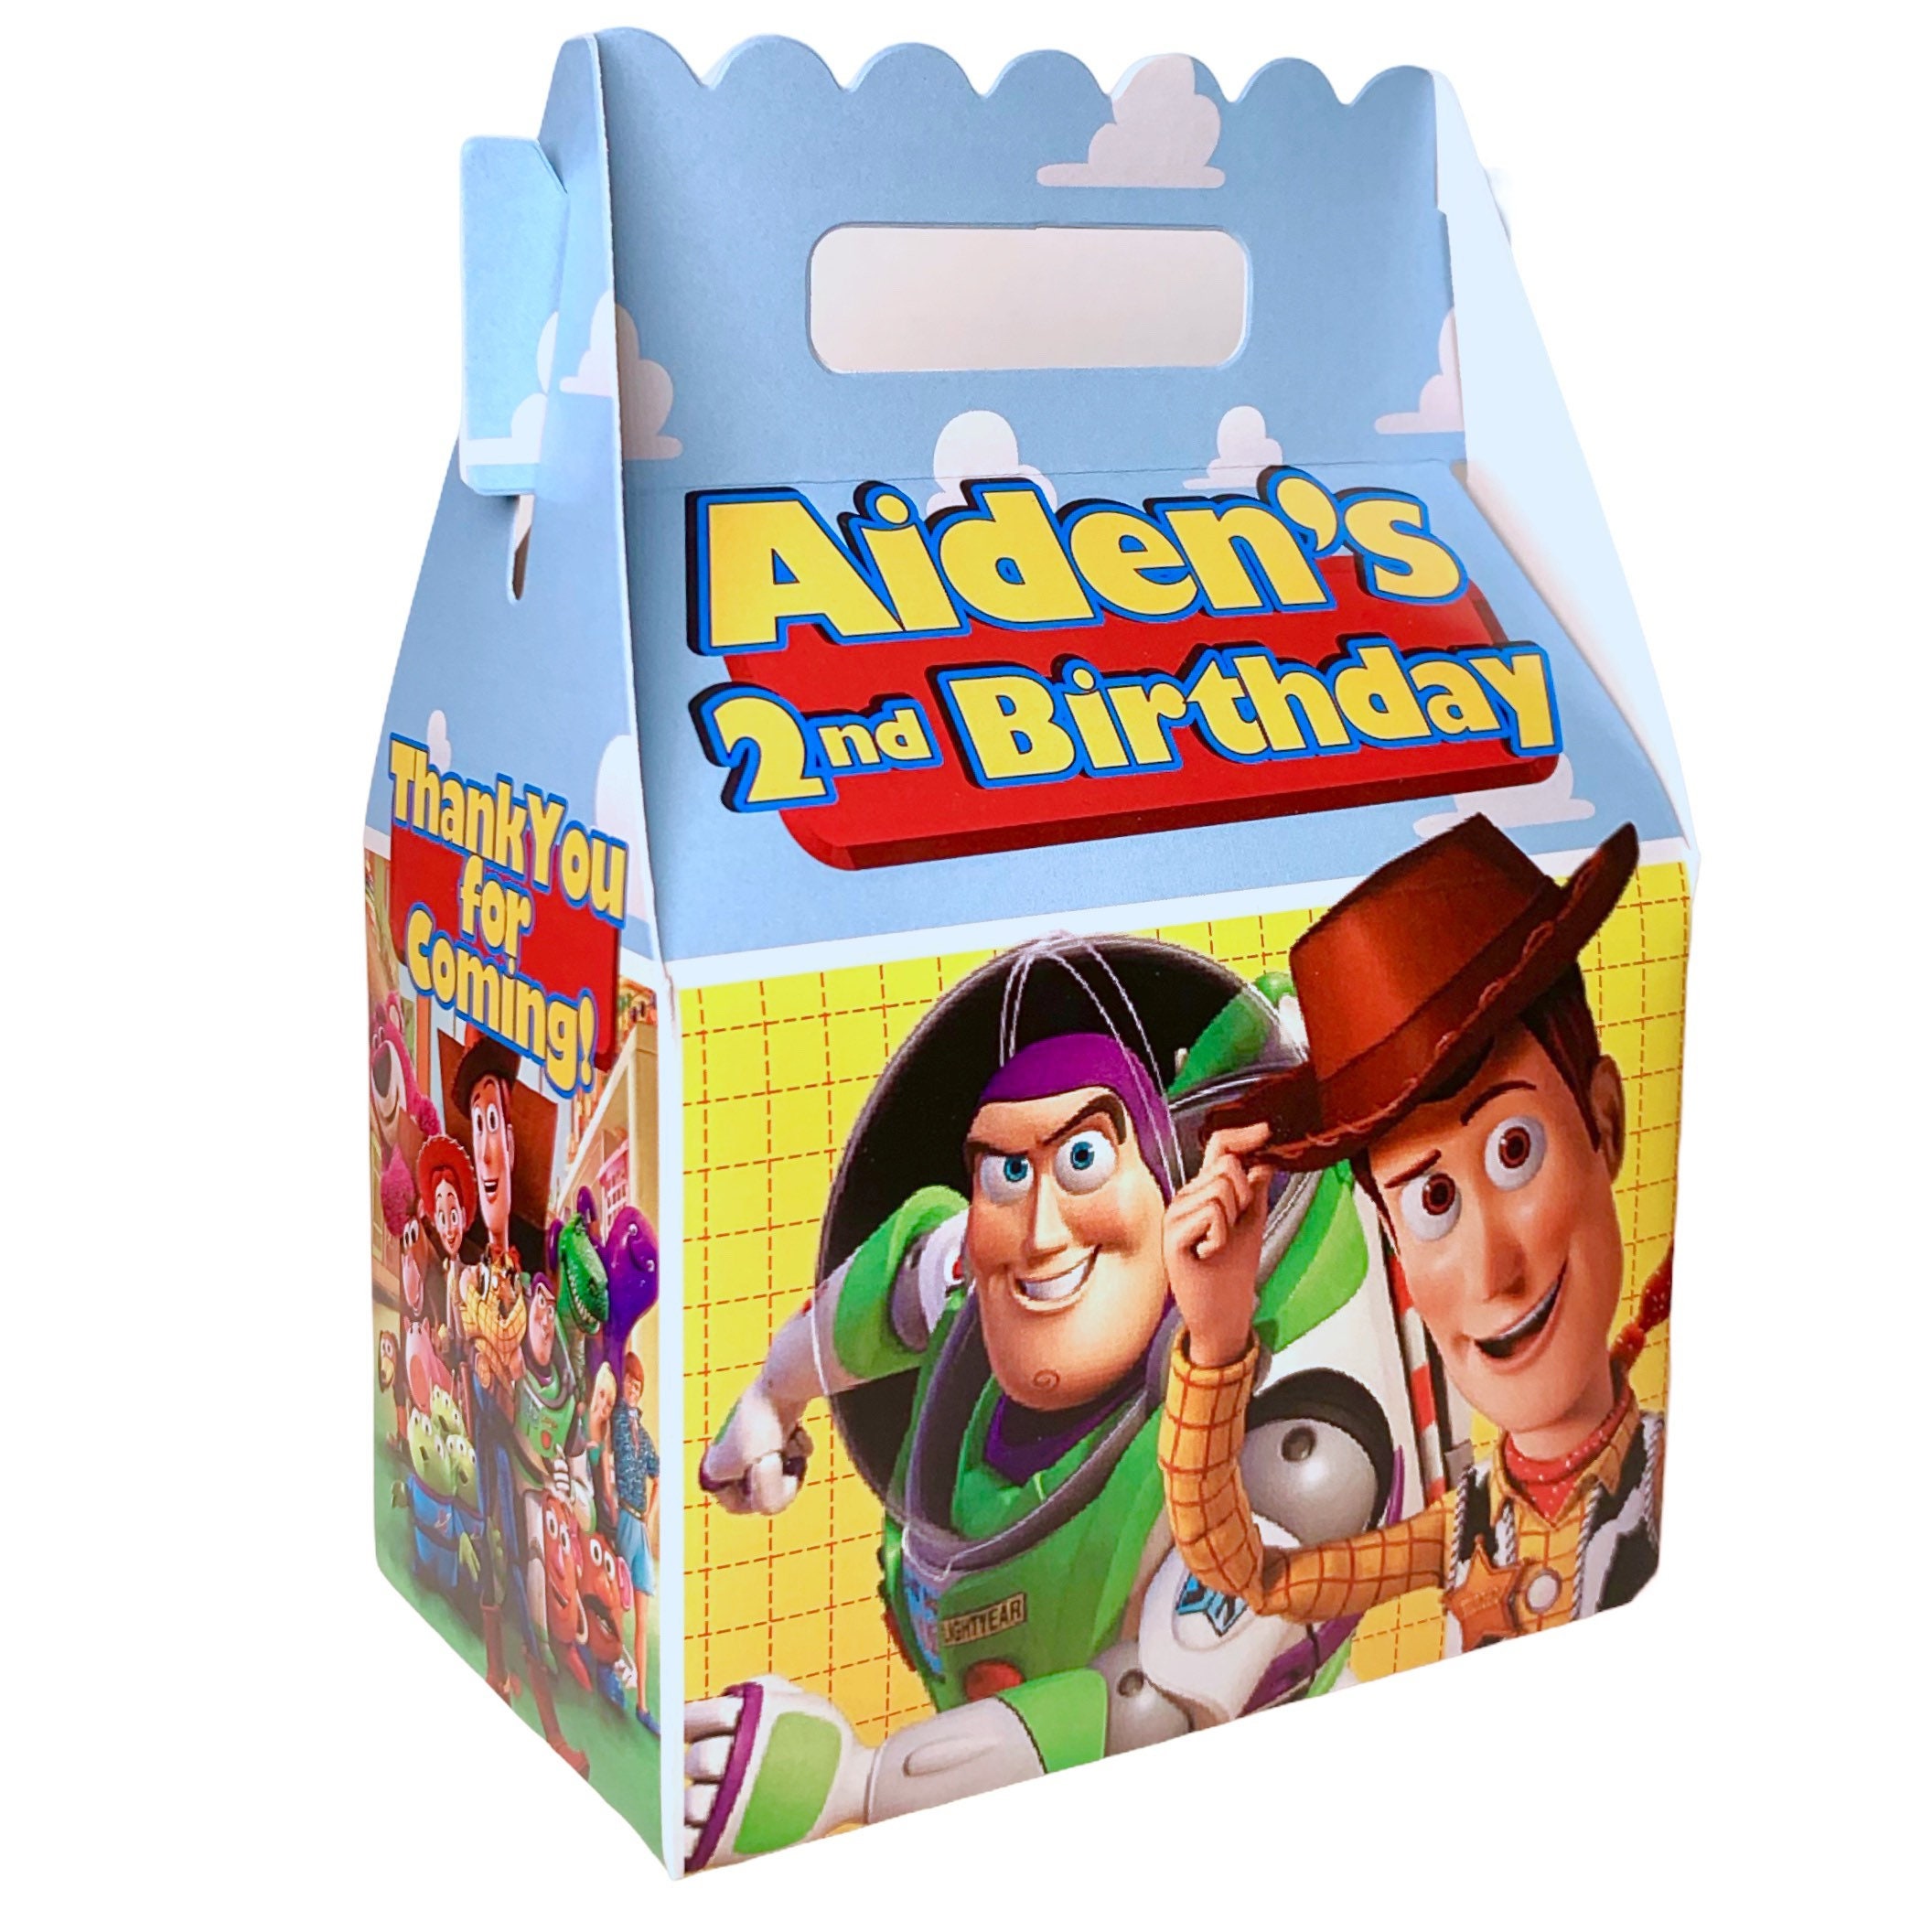 Toy Story Bolsa De Cumpleaños Toy Story Pack 10 Unidades